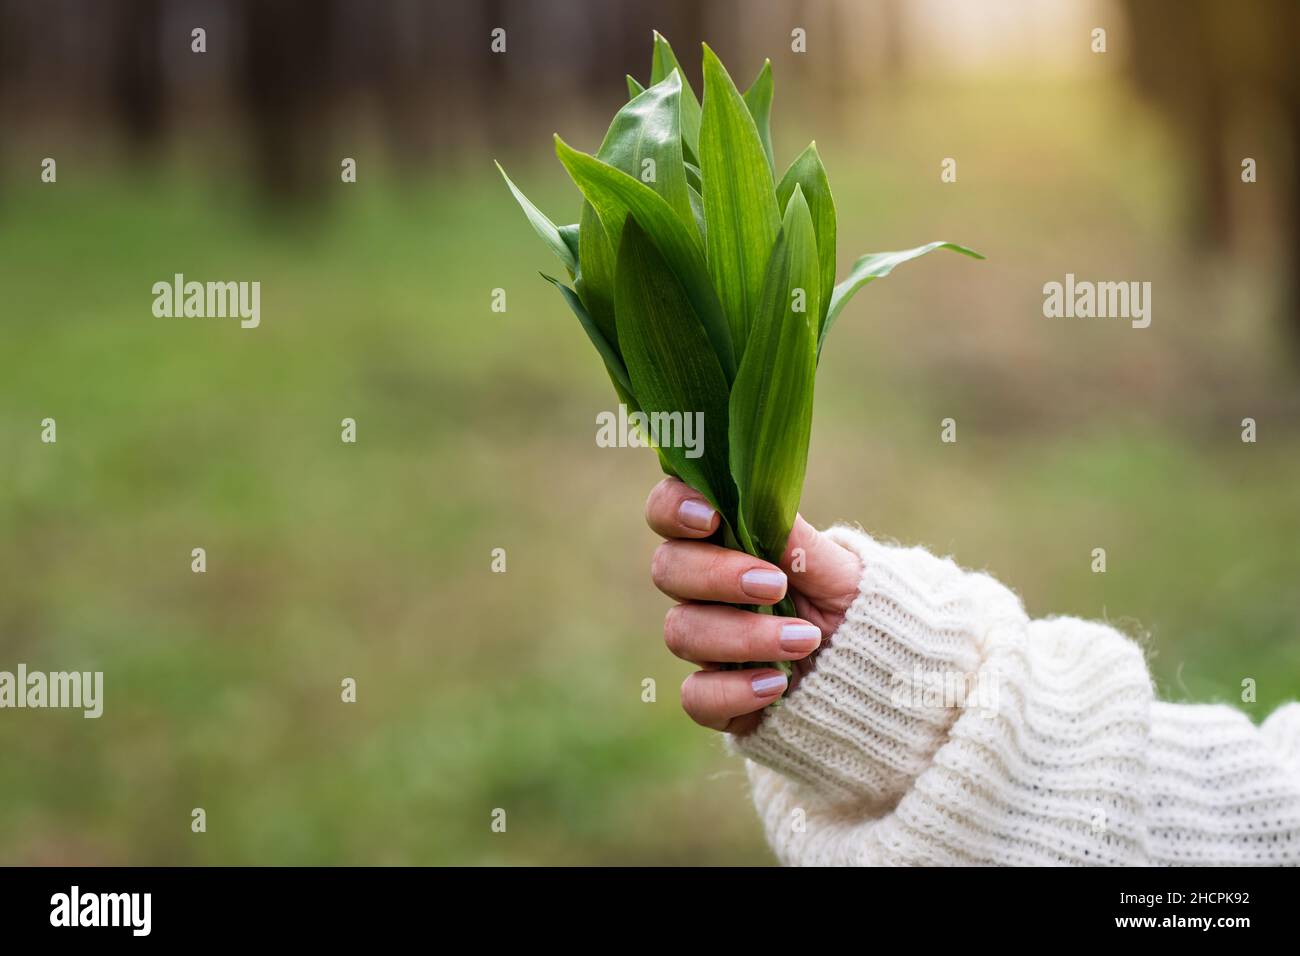 Wild garlic (allium ursinum) in female hand. Woman holding bunch of herbal Ramson leaves in forest Stock Photo